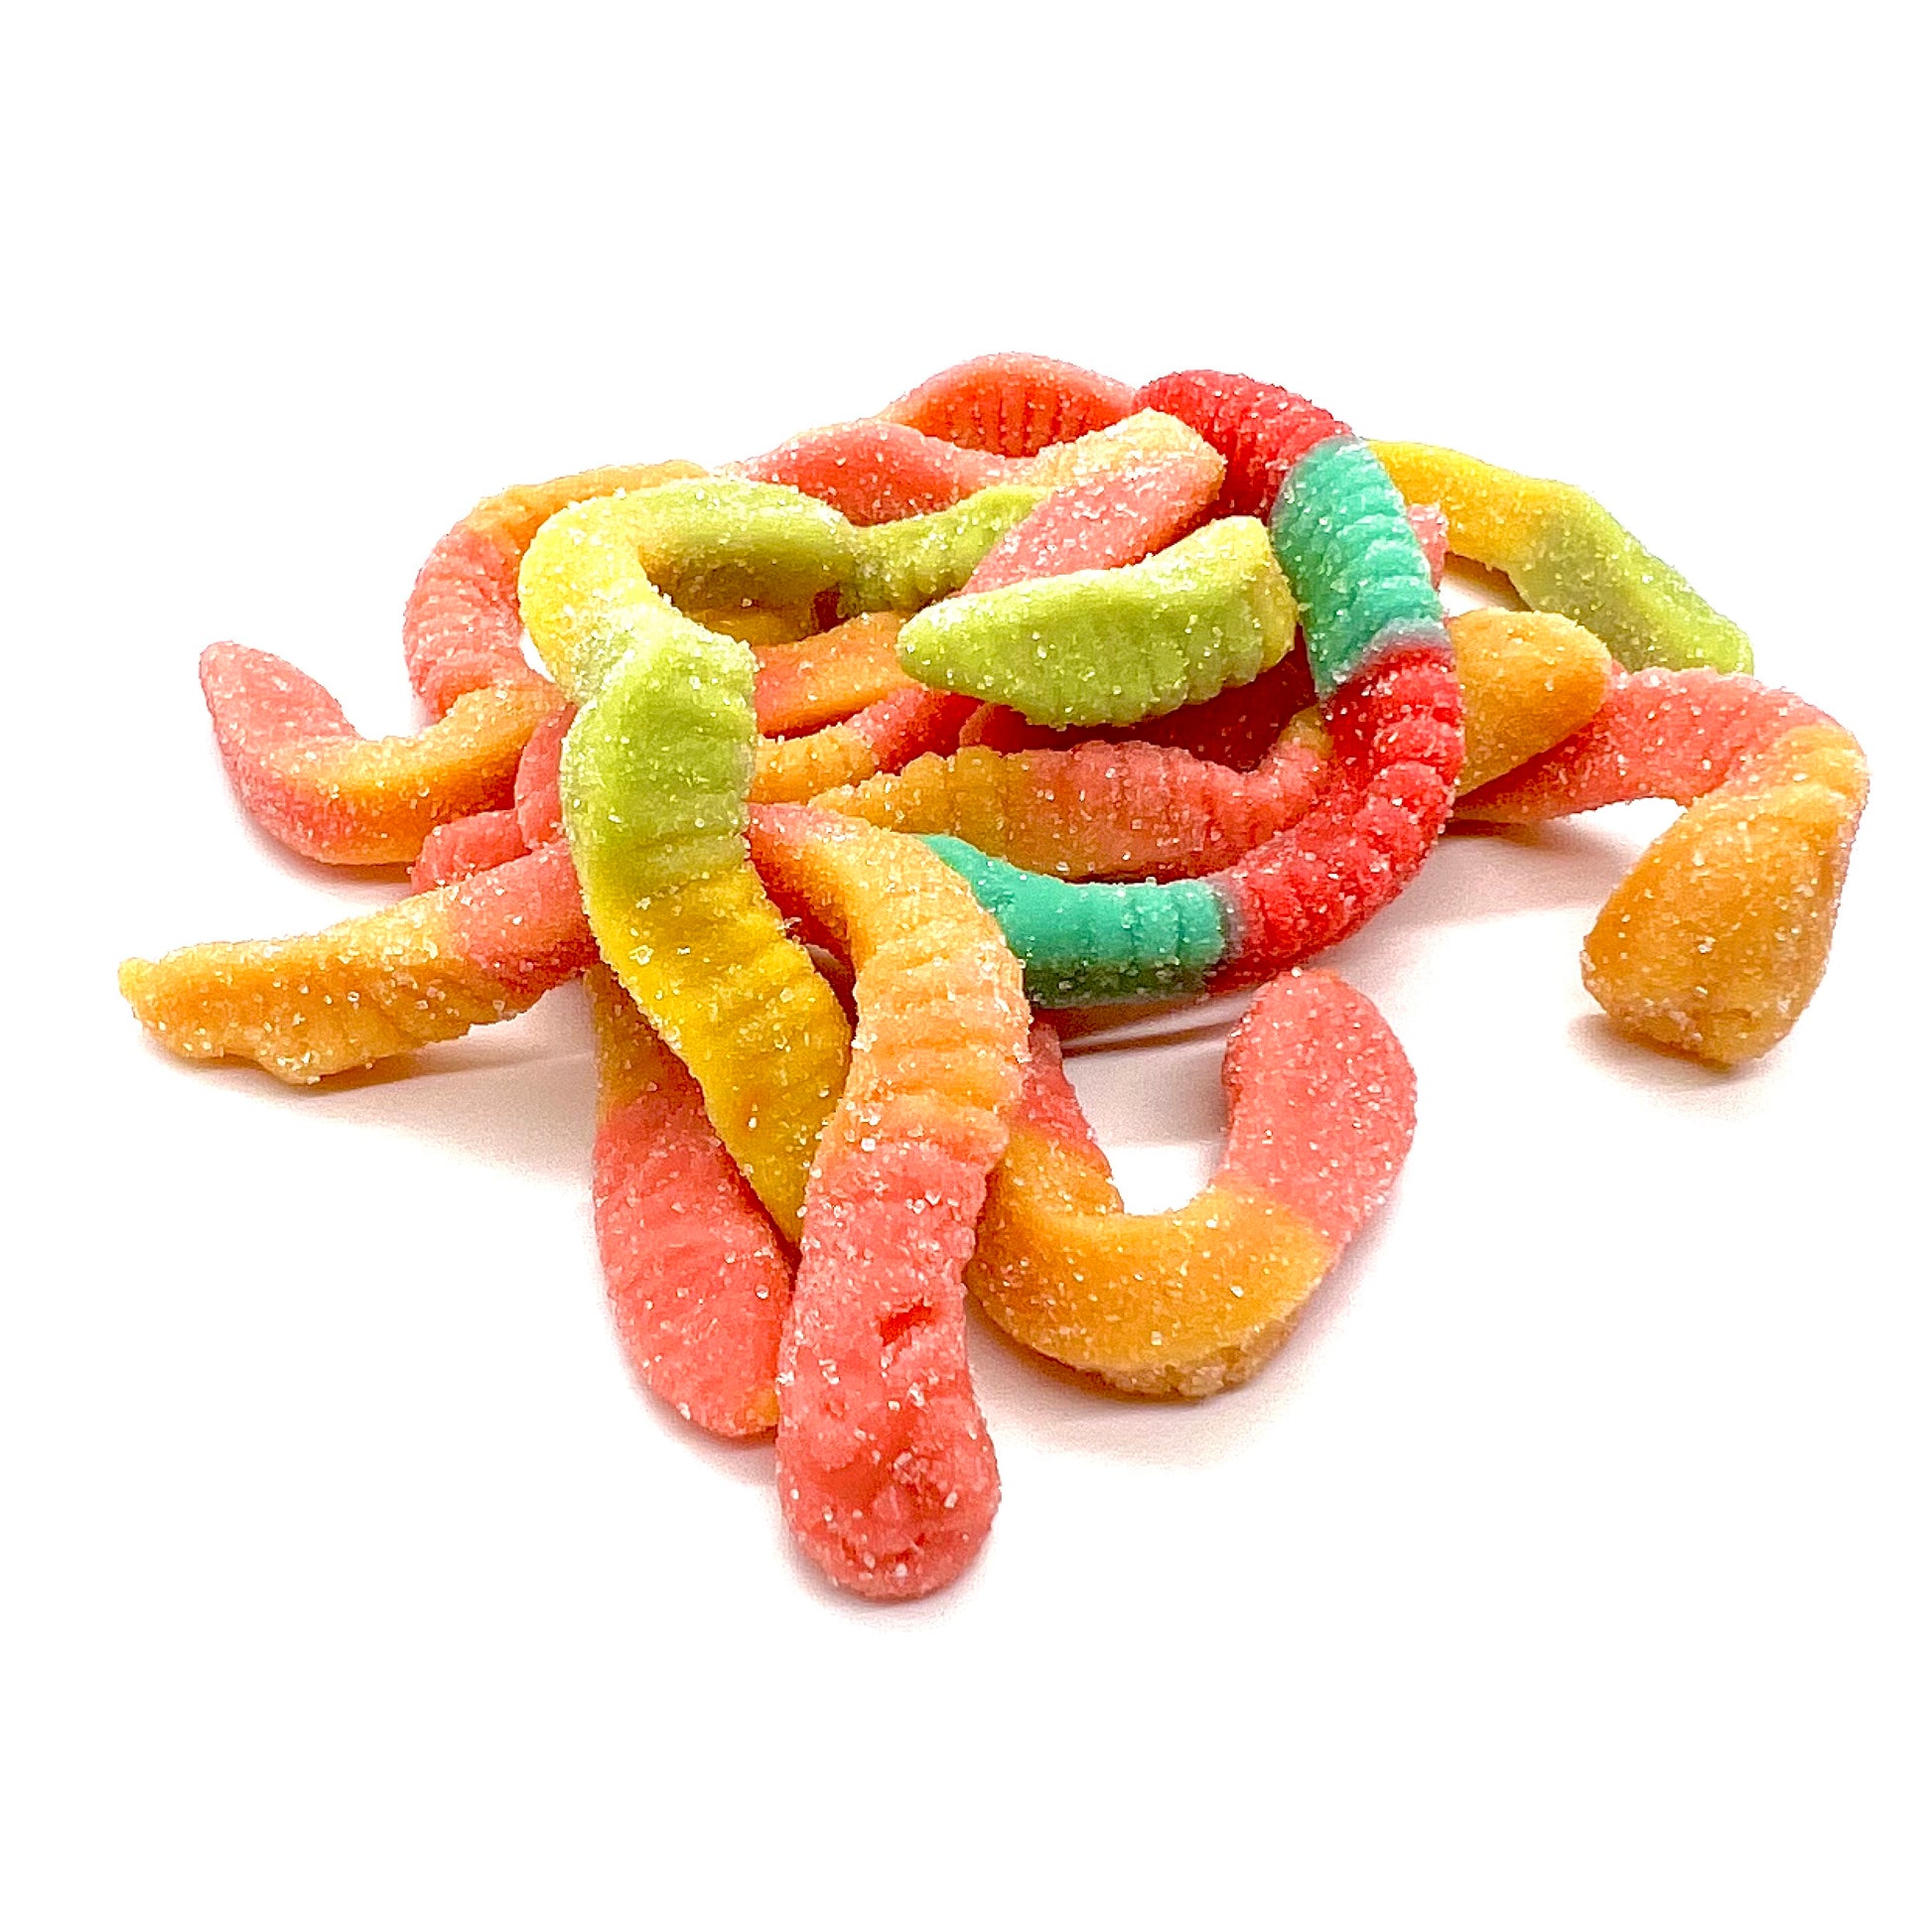 Brite Crawlers (Gummy) - Wholesale Unlimited Inc.